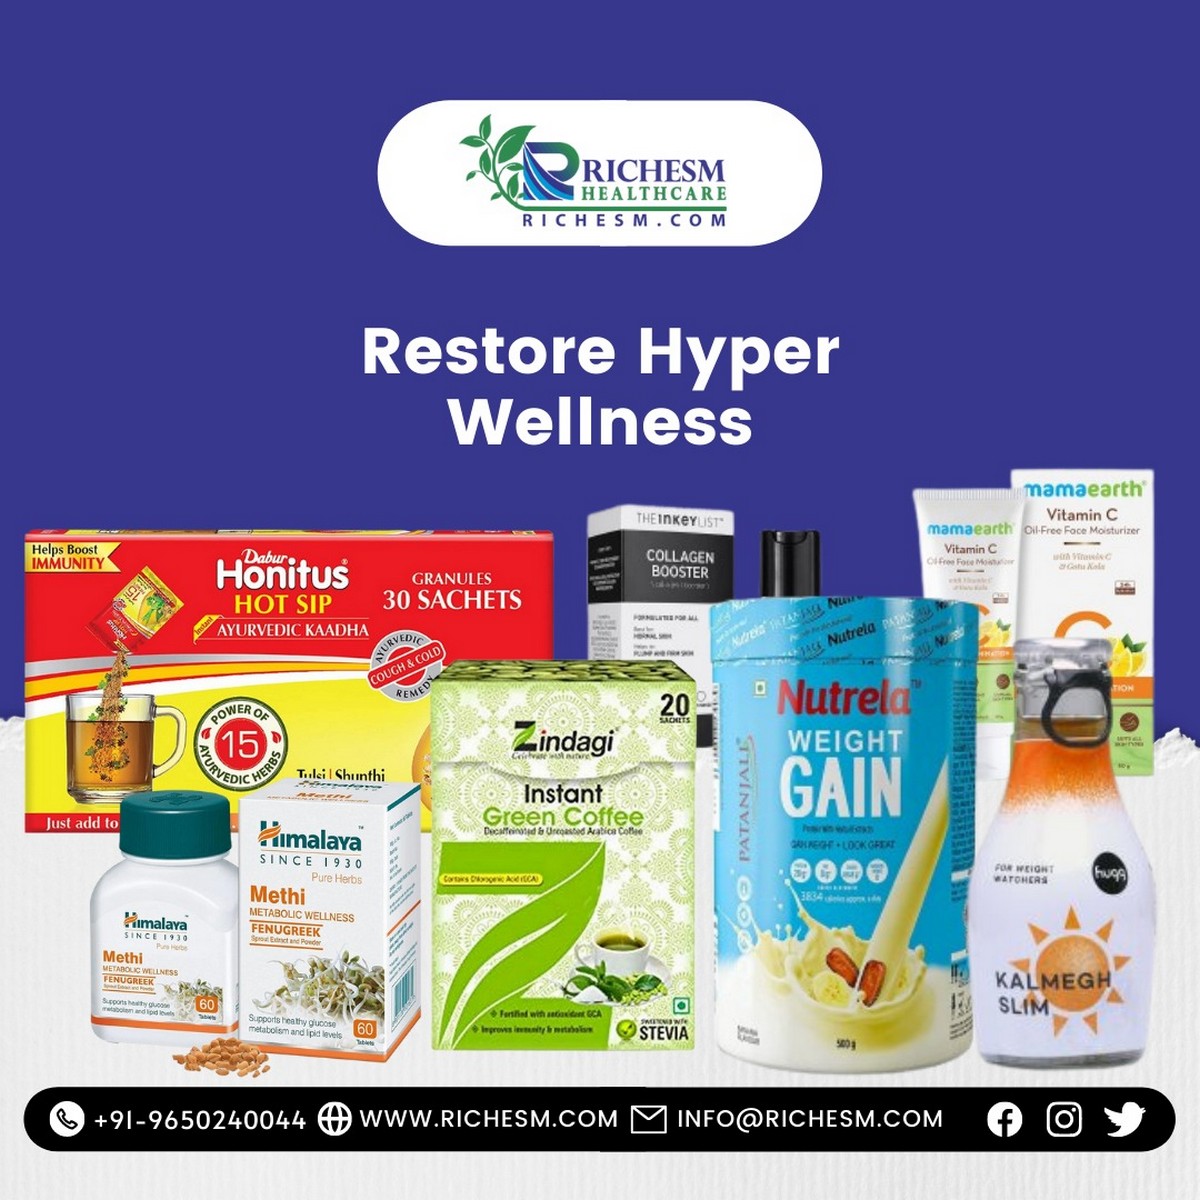 Restore Hyper Wellness Forever Health and Nutrition Restore Hyper Wellness